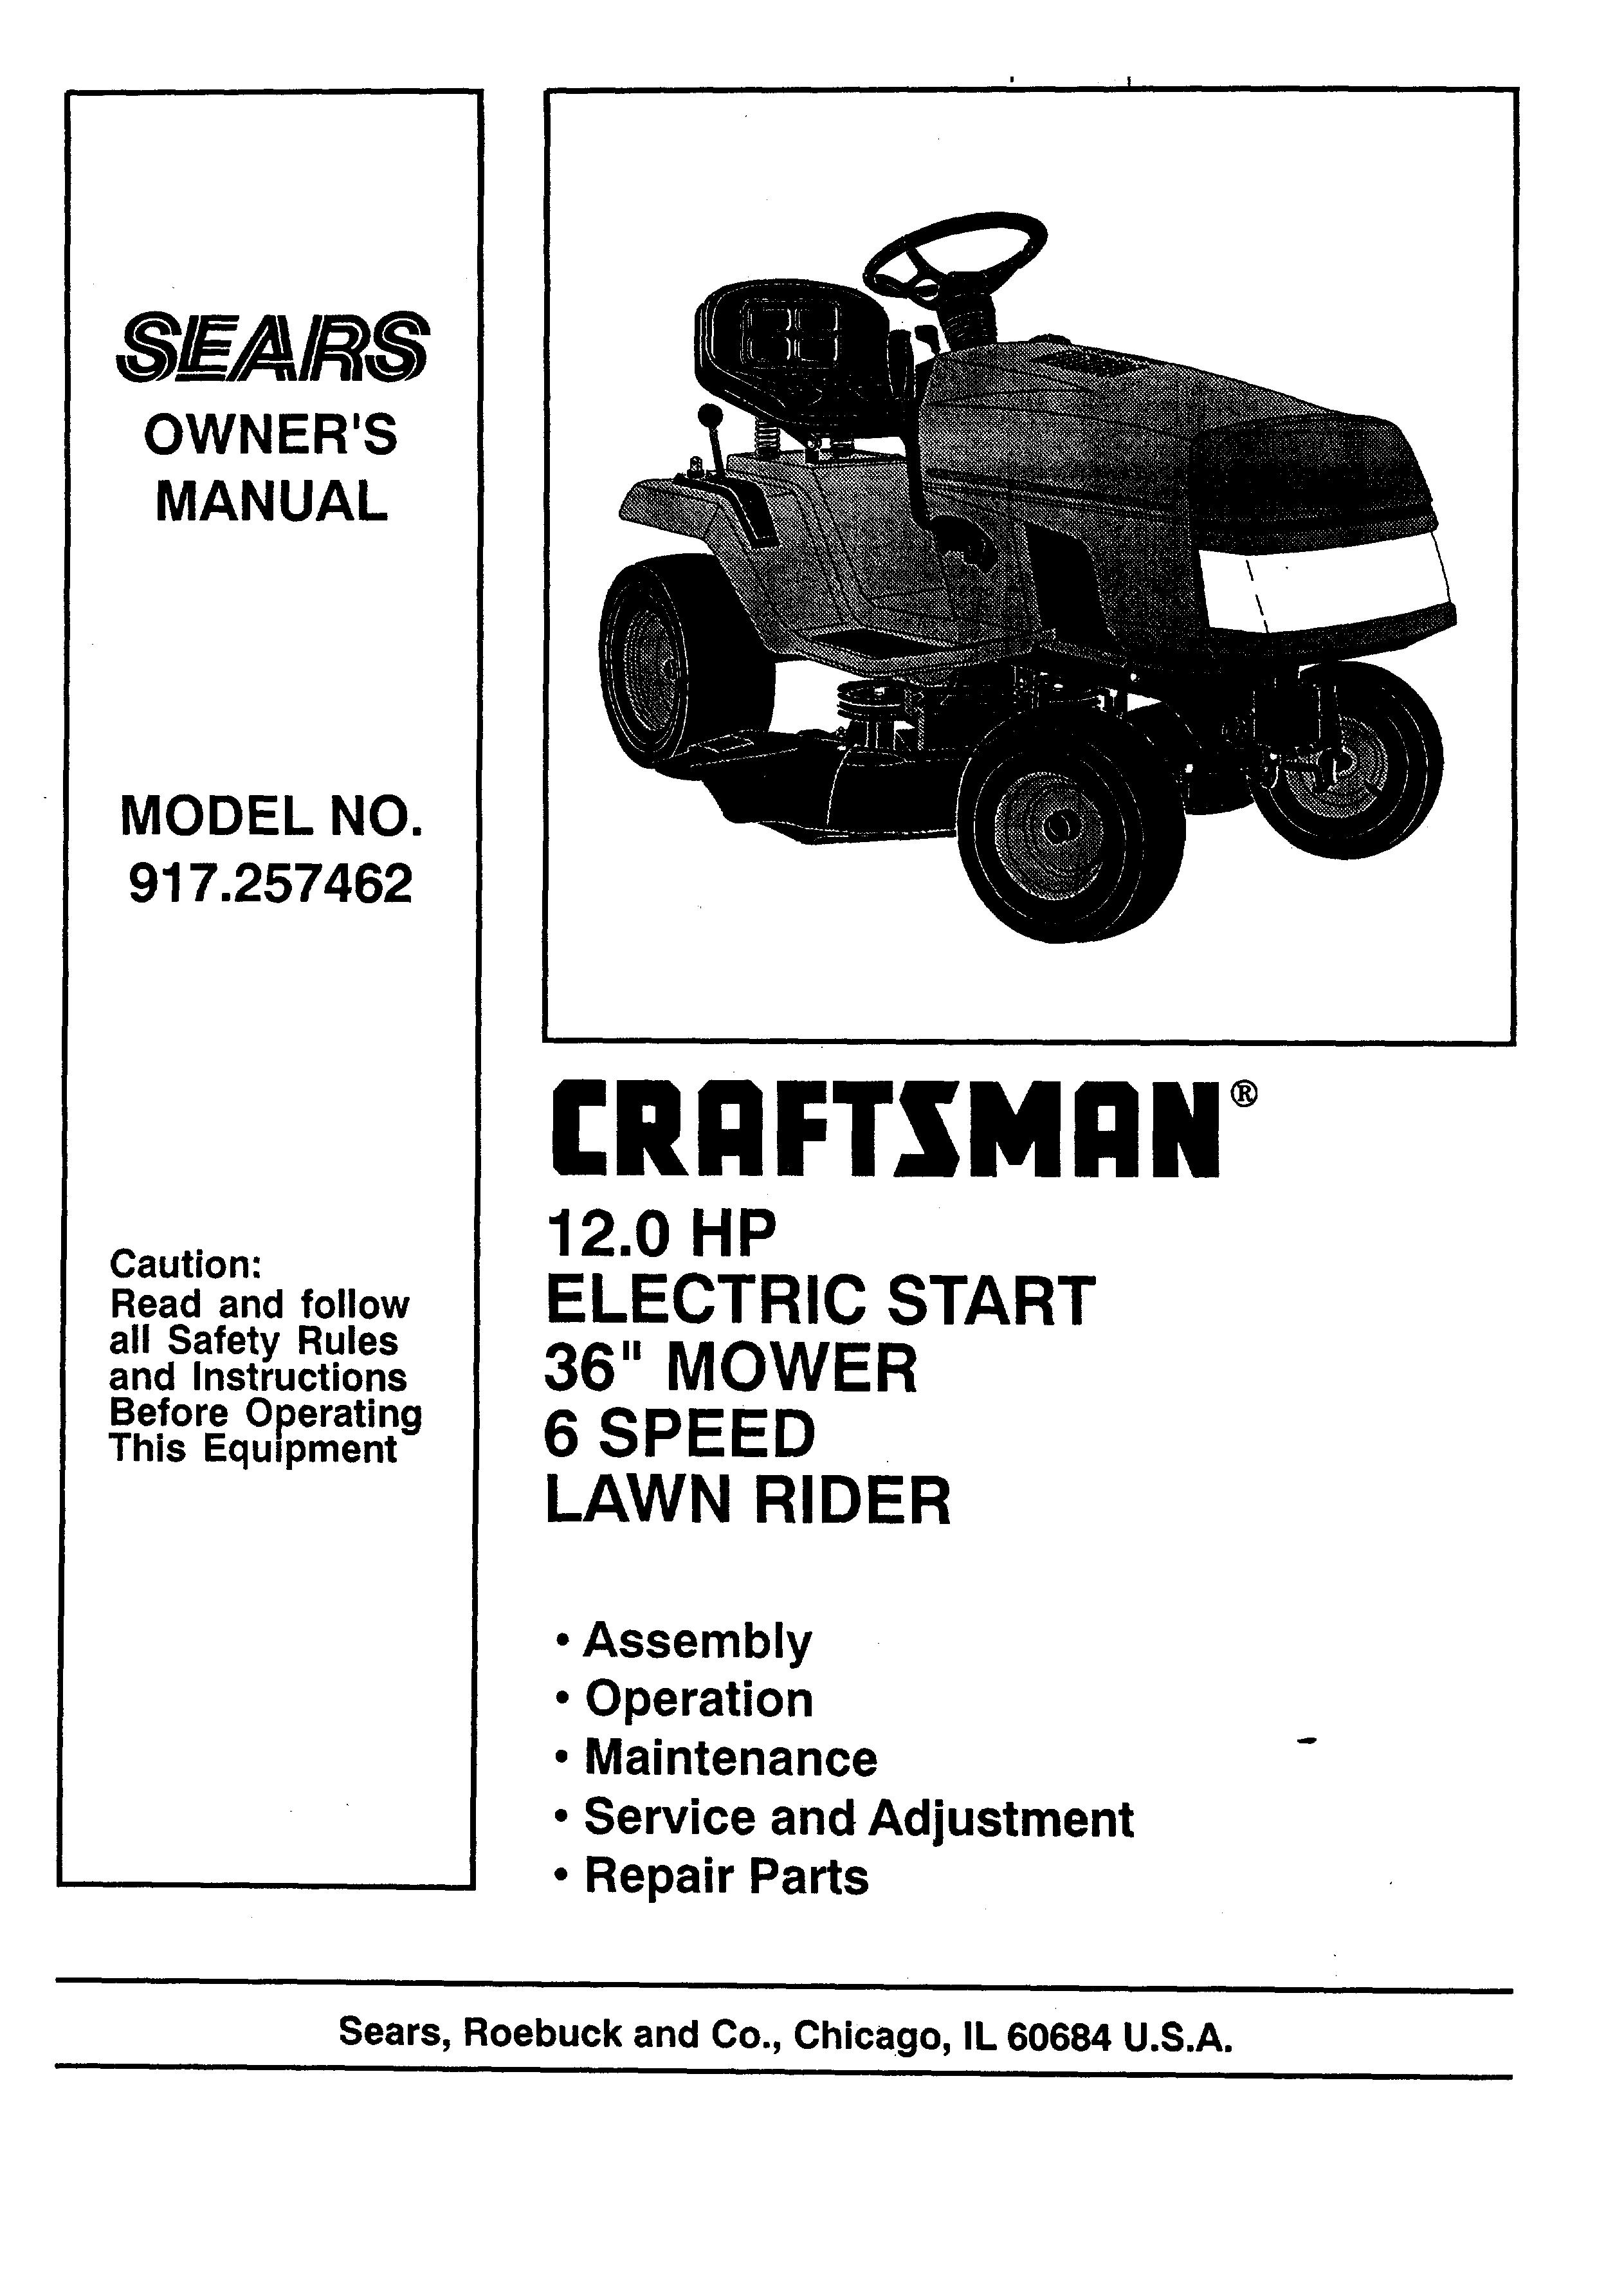 Sears 917.257462 Lawn Mower User Manual